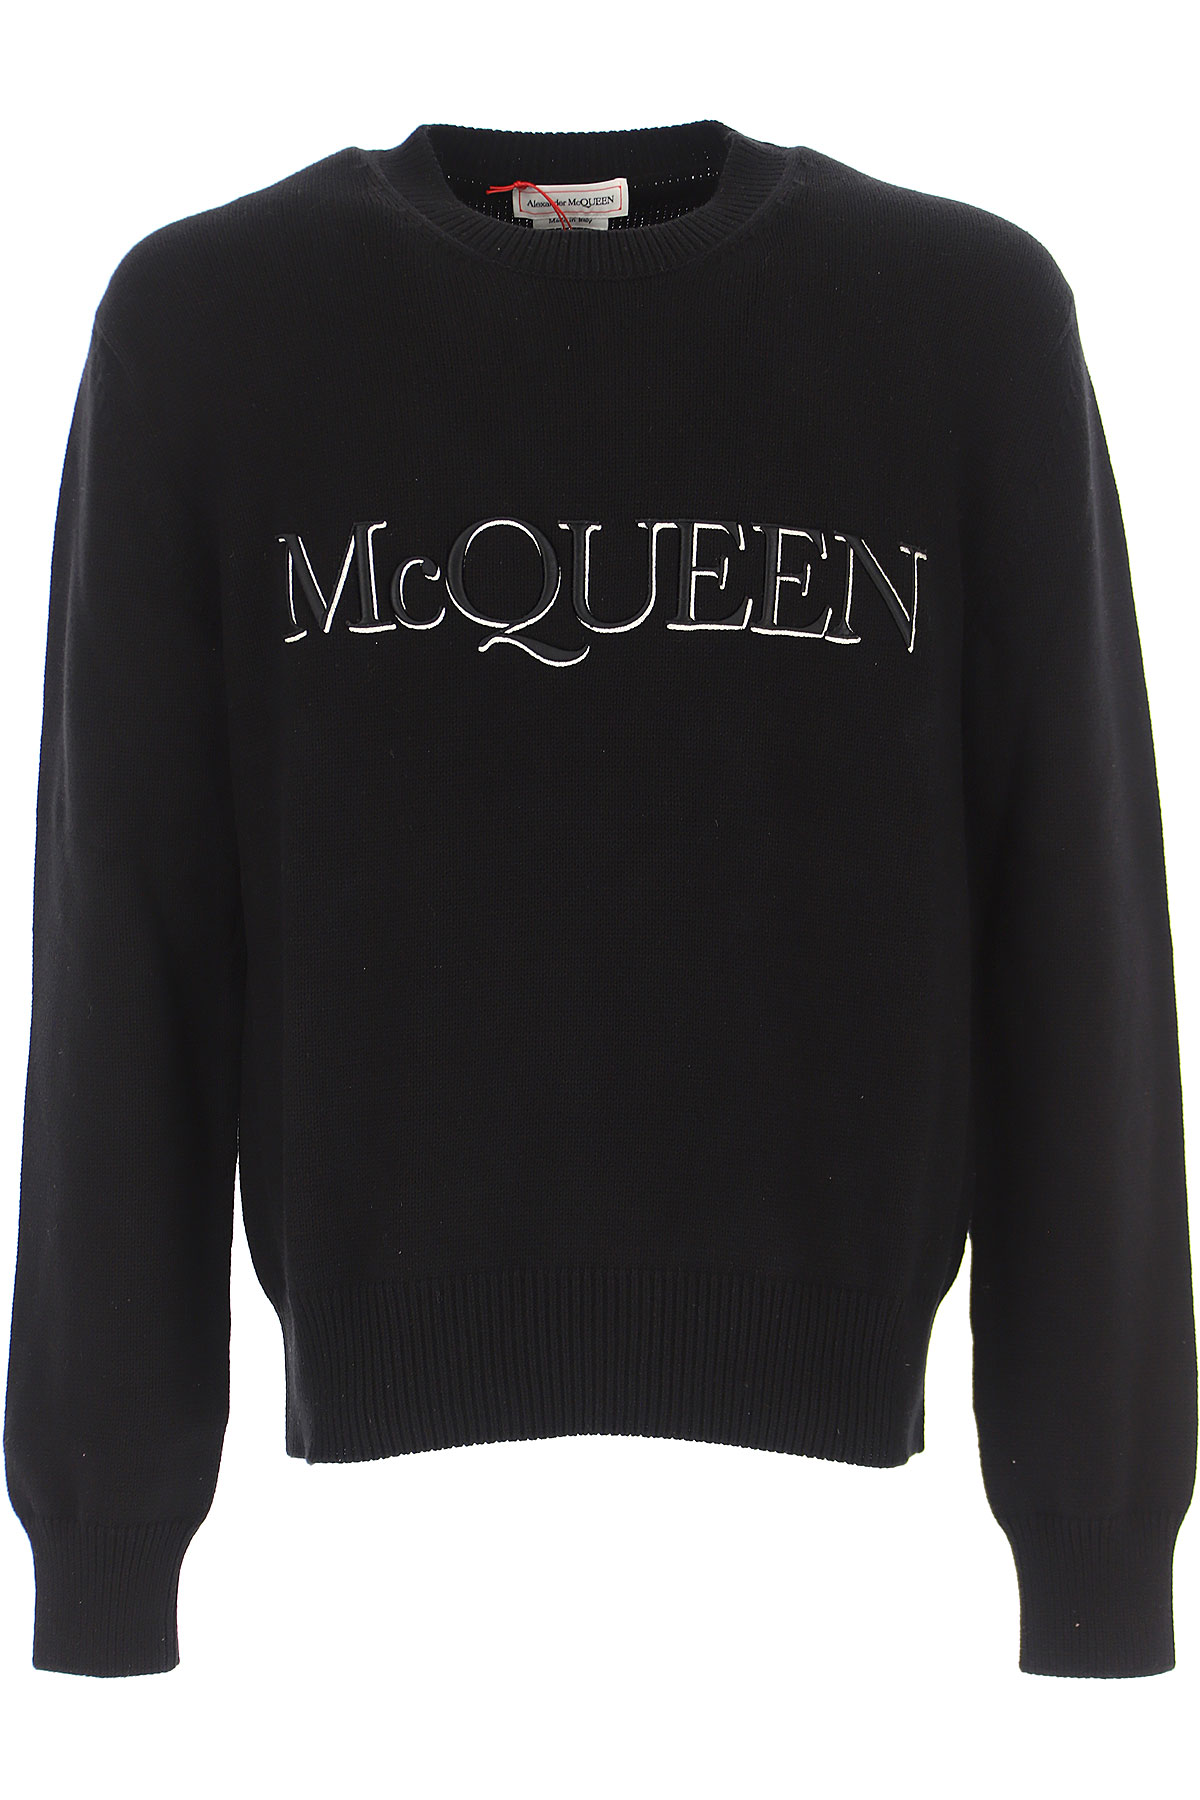 Mens Clothing Alexander McQueen, Style code: 651184-q1xay-1011